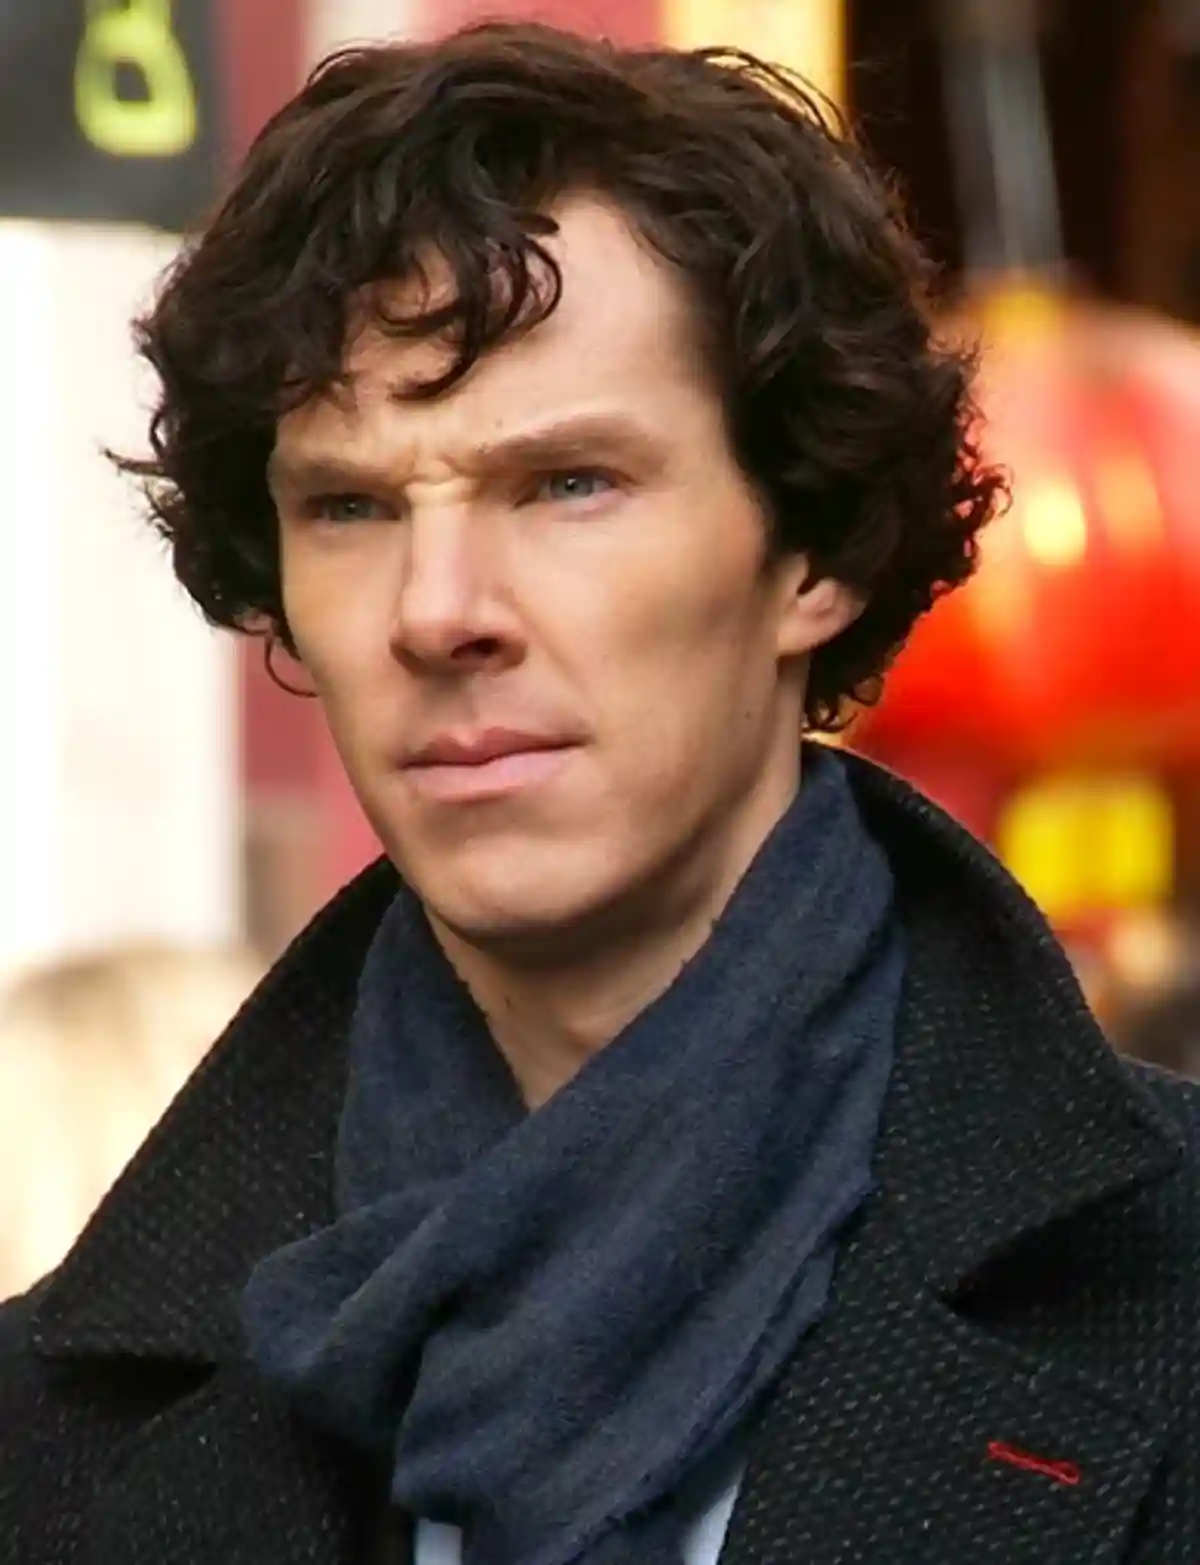 Бенедикт Камбербэтч в роли Шерлока Холмса. Фото: Benedict_Cumberbatch_filming_Sherlock.jpg / Wikipedia.org